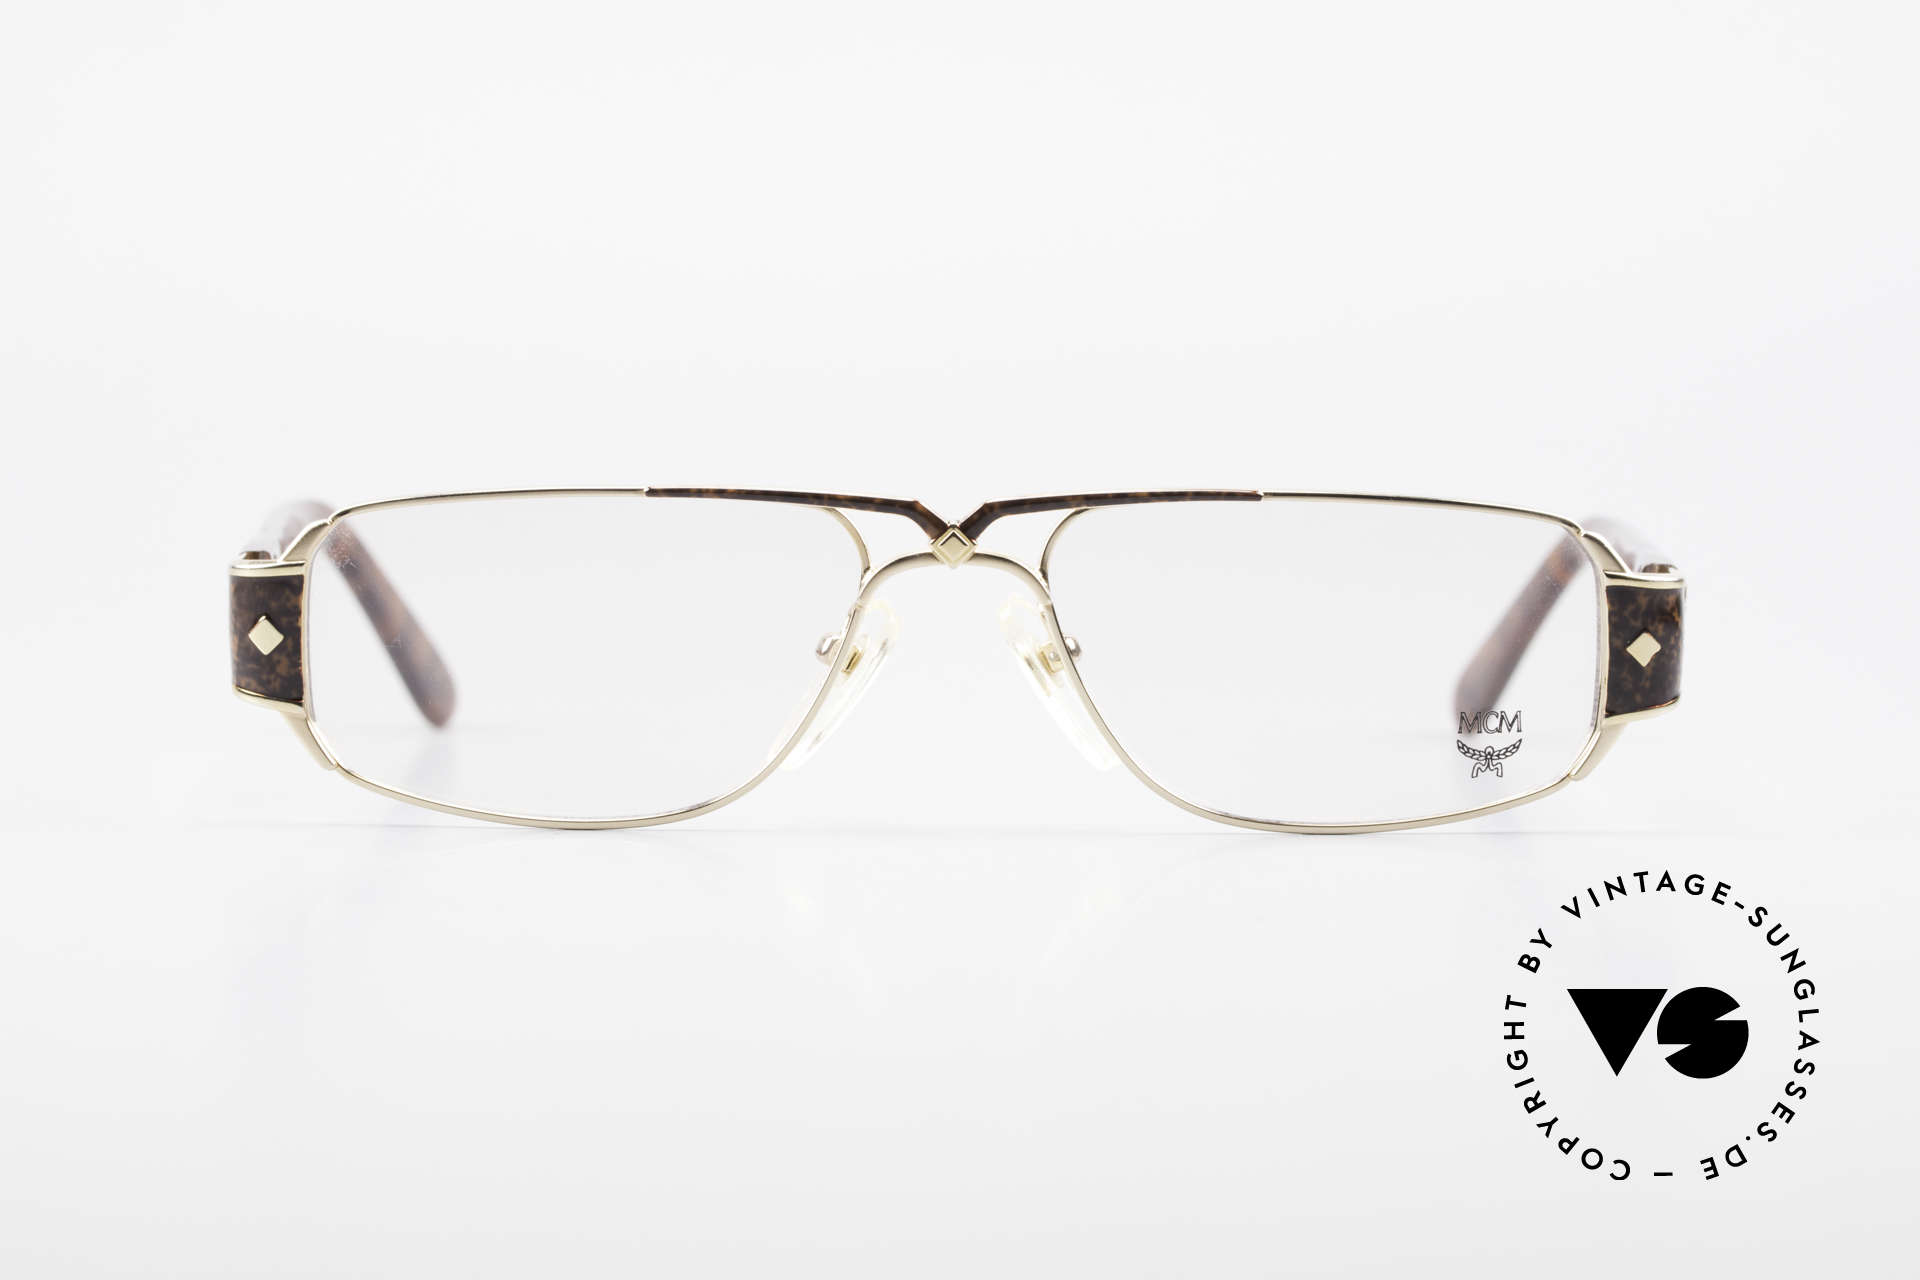 MCM München 7 80's Luxury Reading Glasses, massive frame design with pompous appliqué, Made for Men and Women